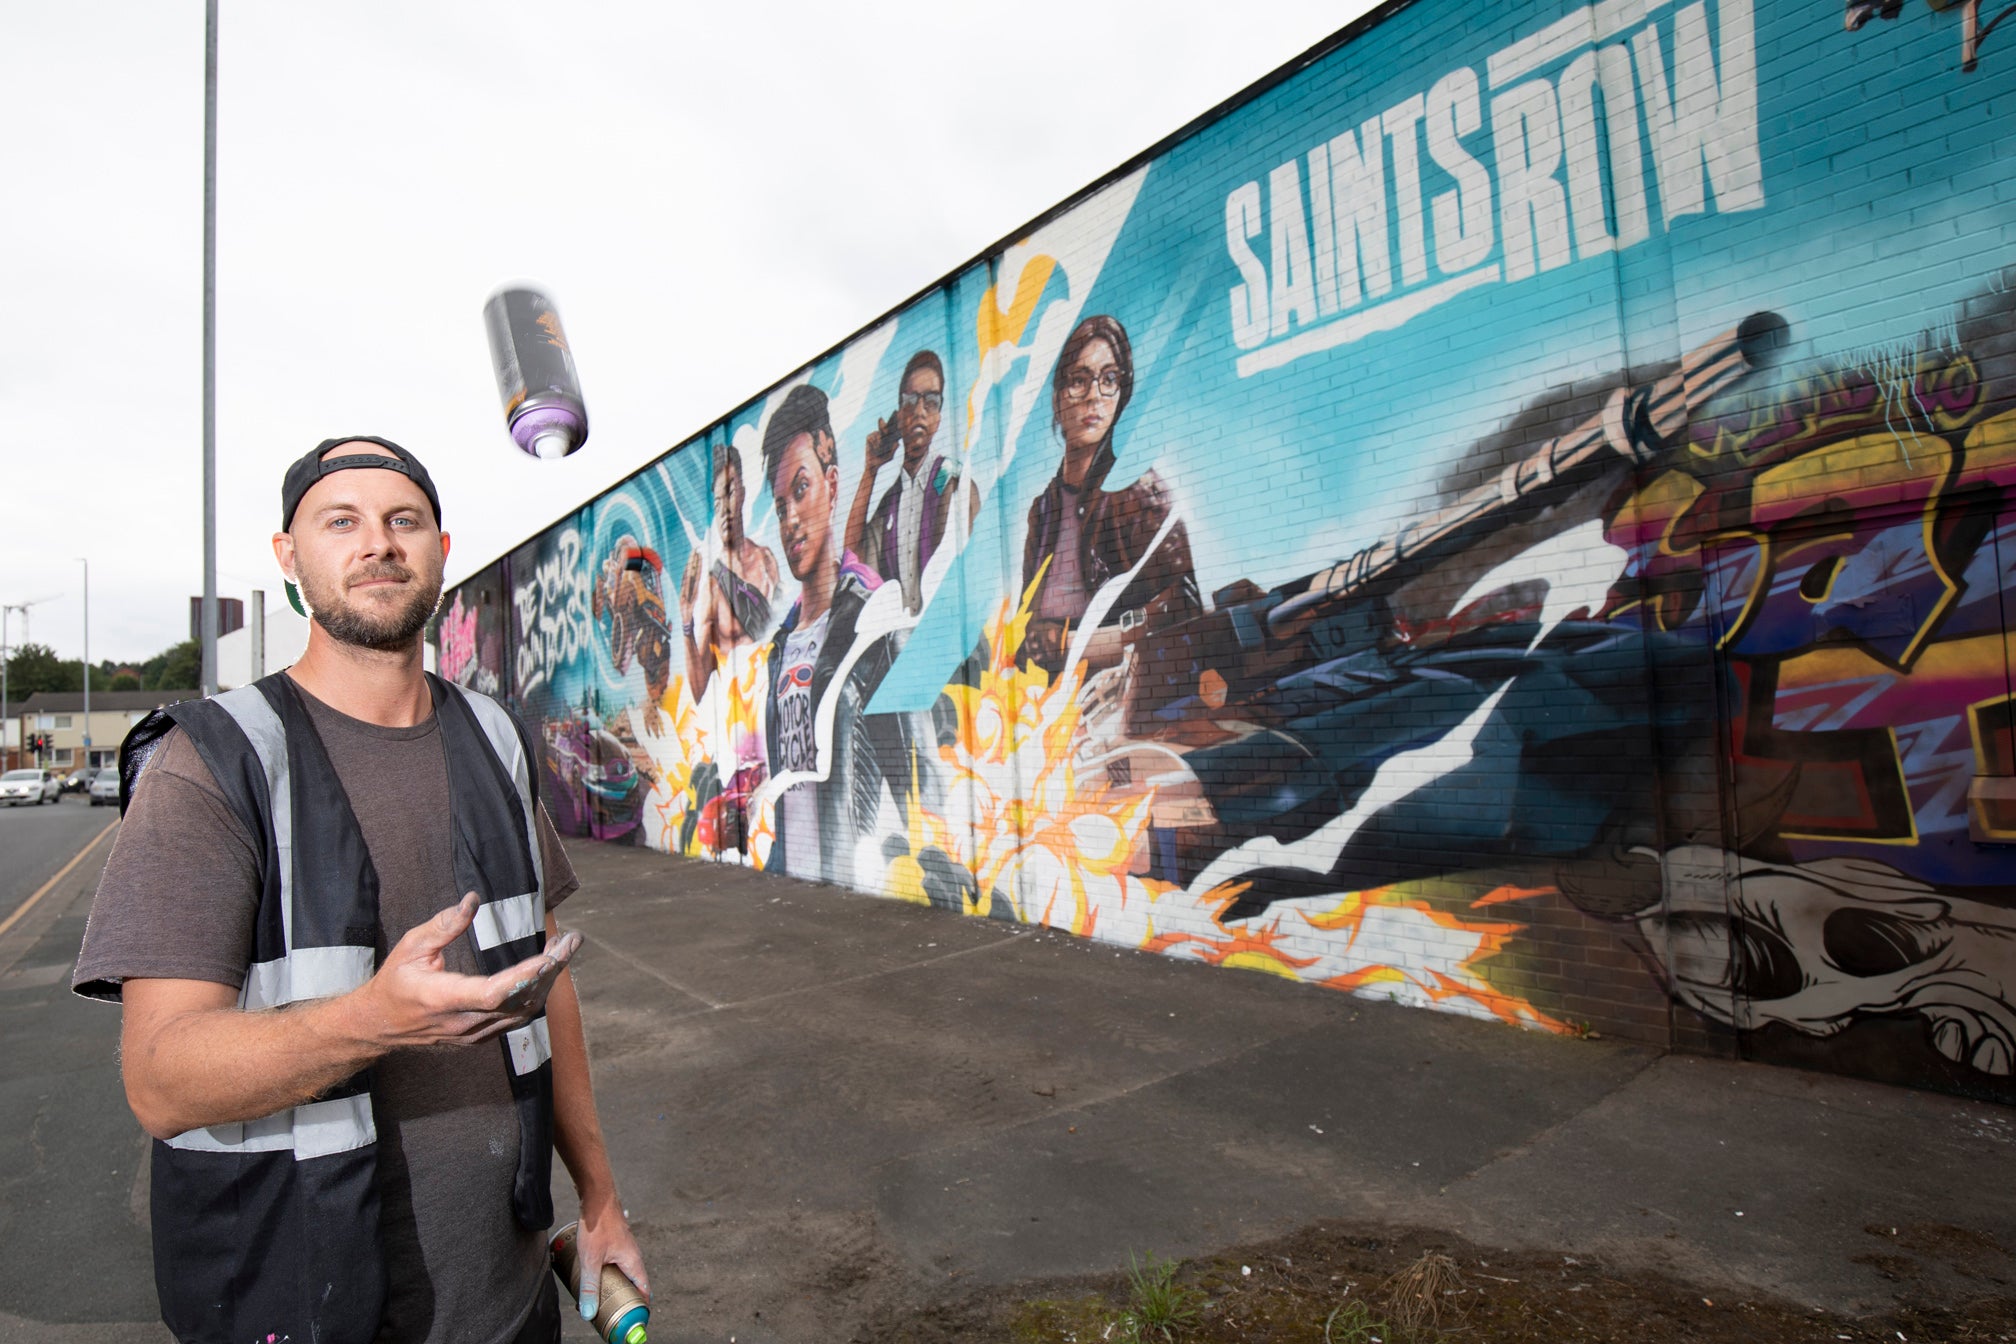 Leeds' Saint Row mural celebrates its "Boss Factory" status.